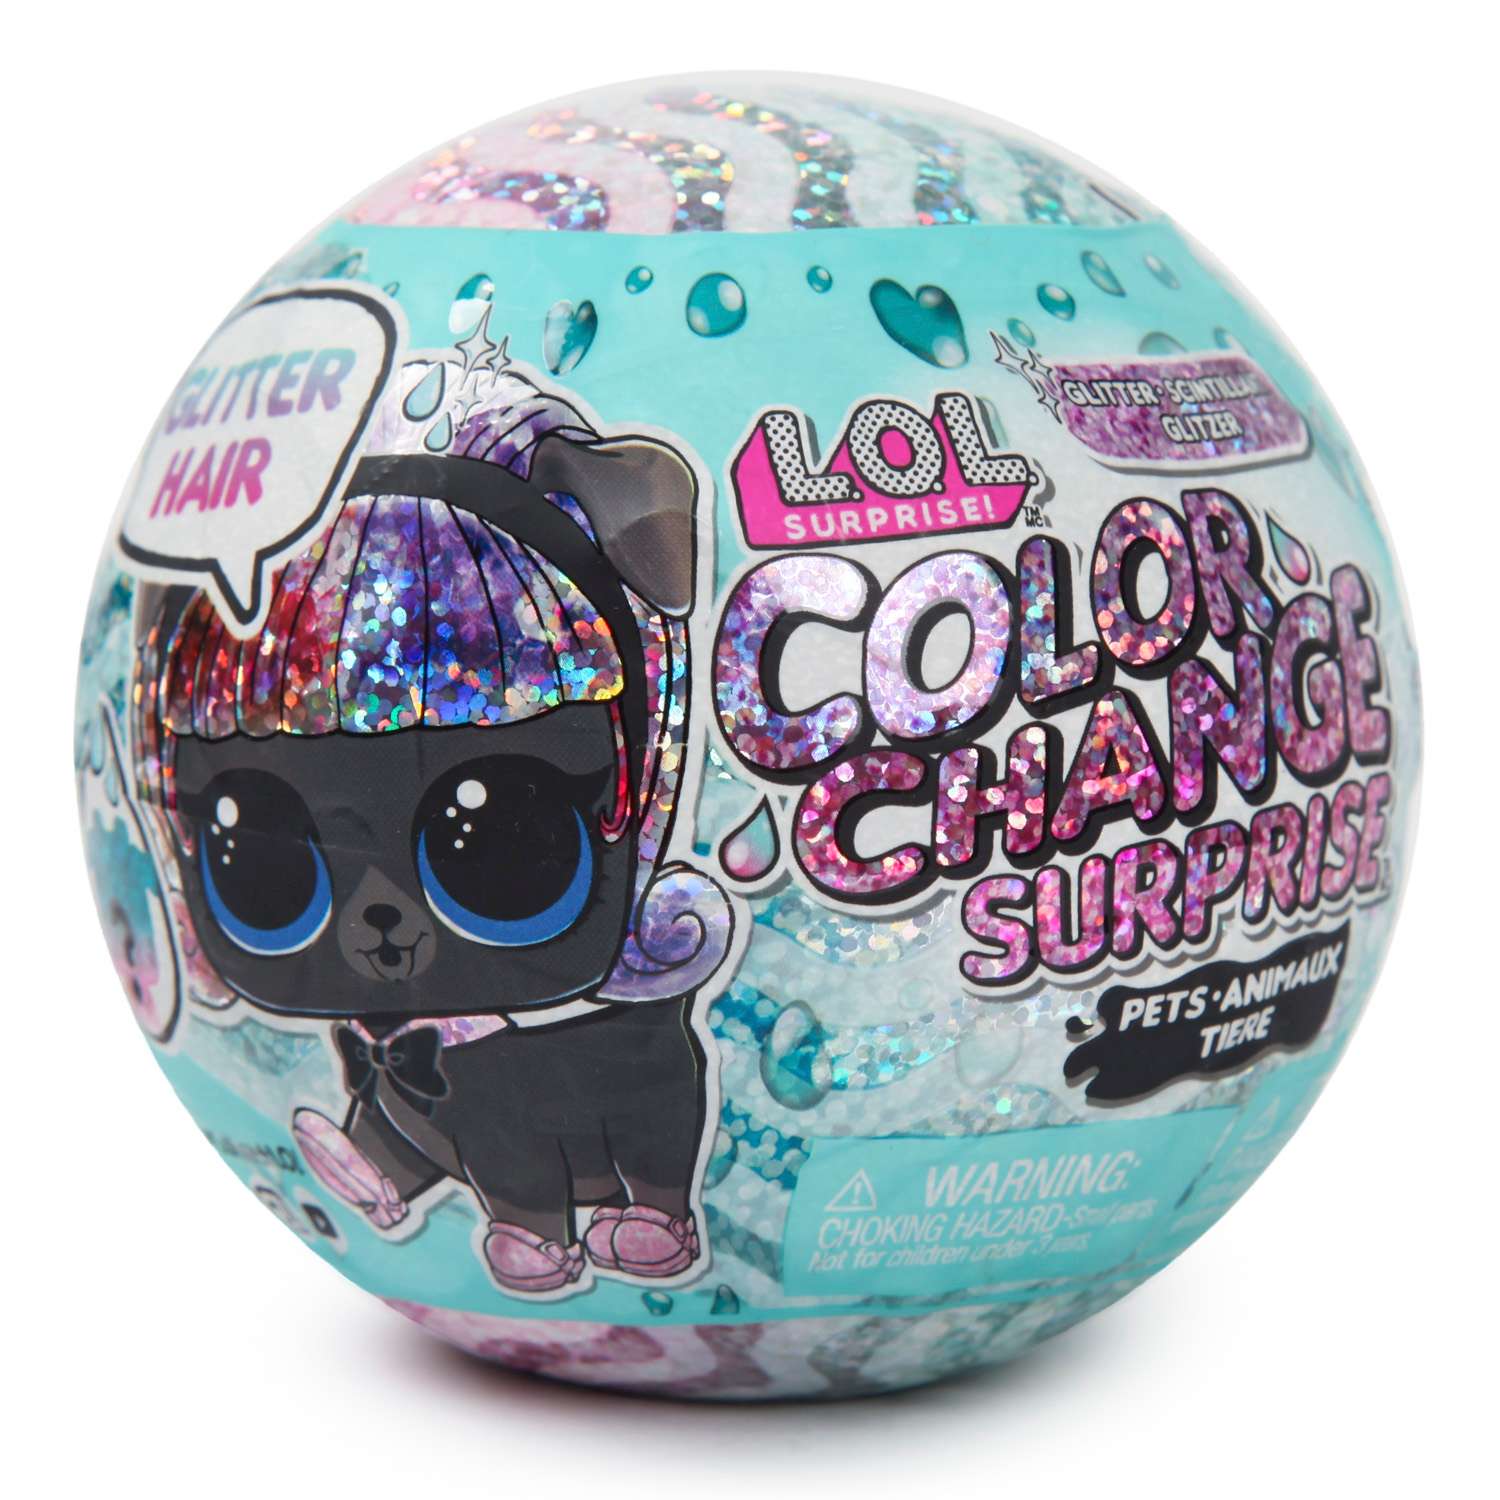 Шар L.O.L. Surprise Color Change Pets в непрозрачной упаковке (Сюрприз) 585312EUC - фото 1